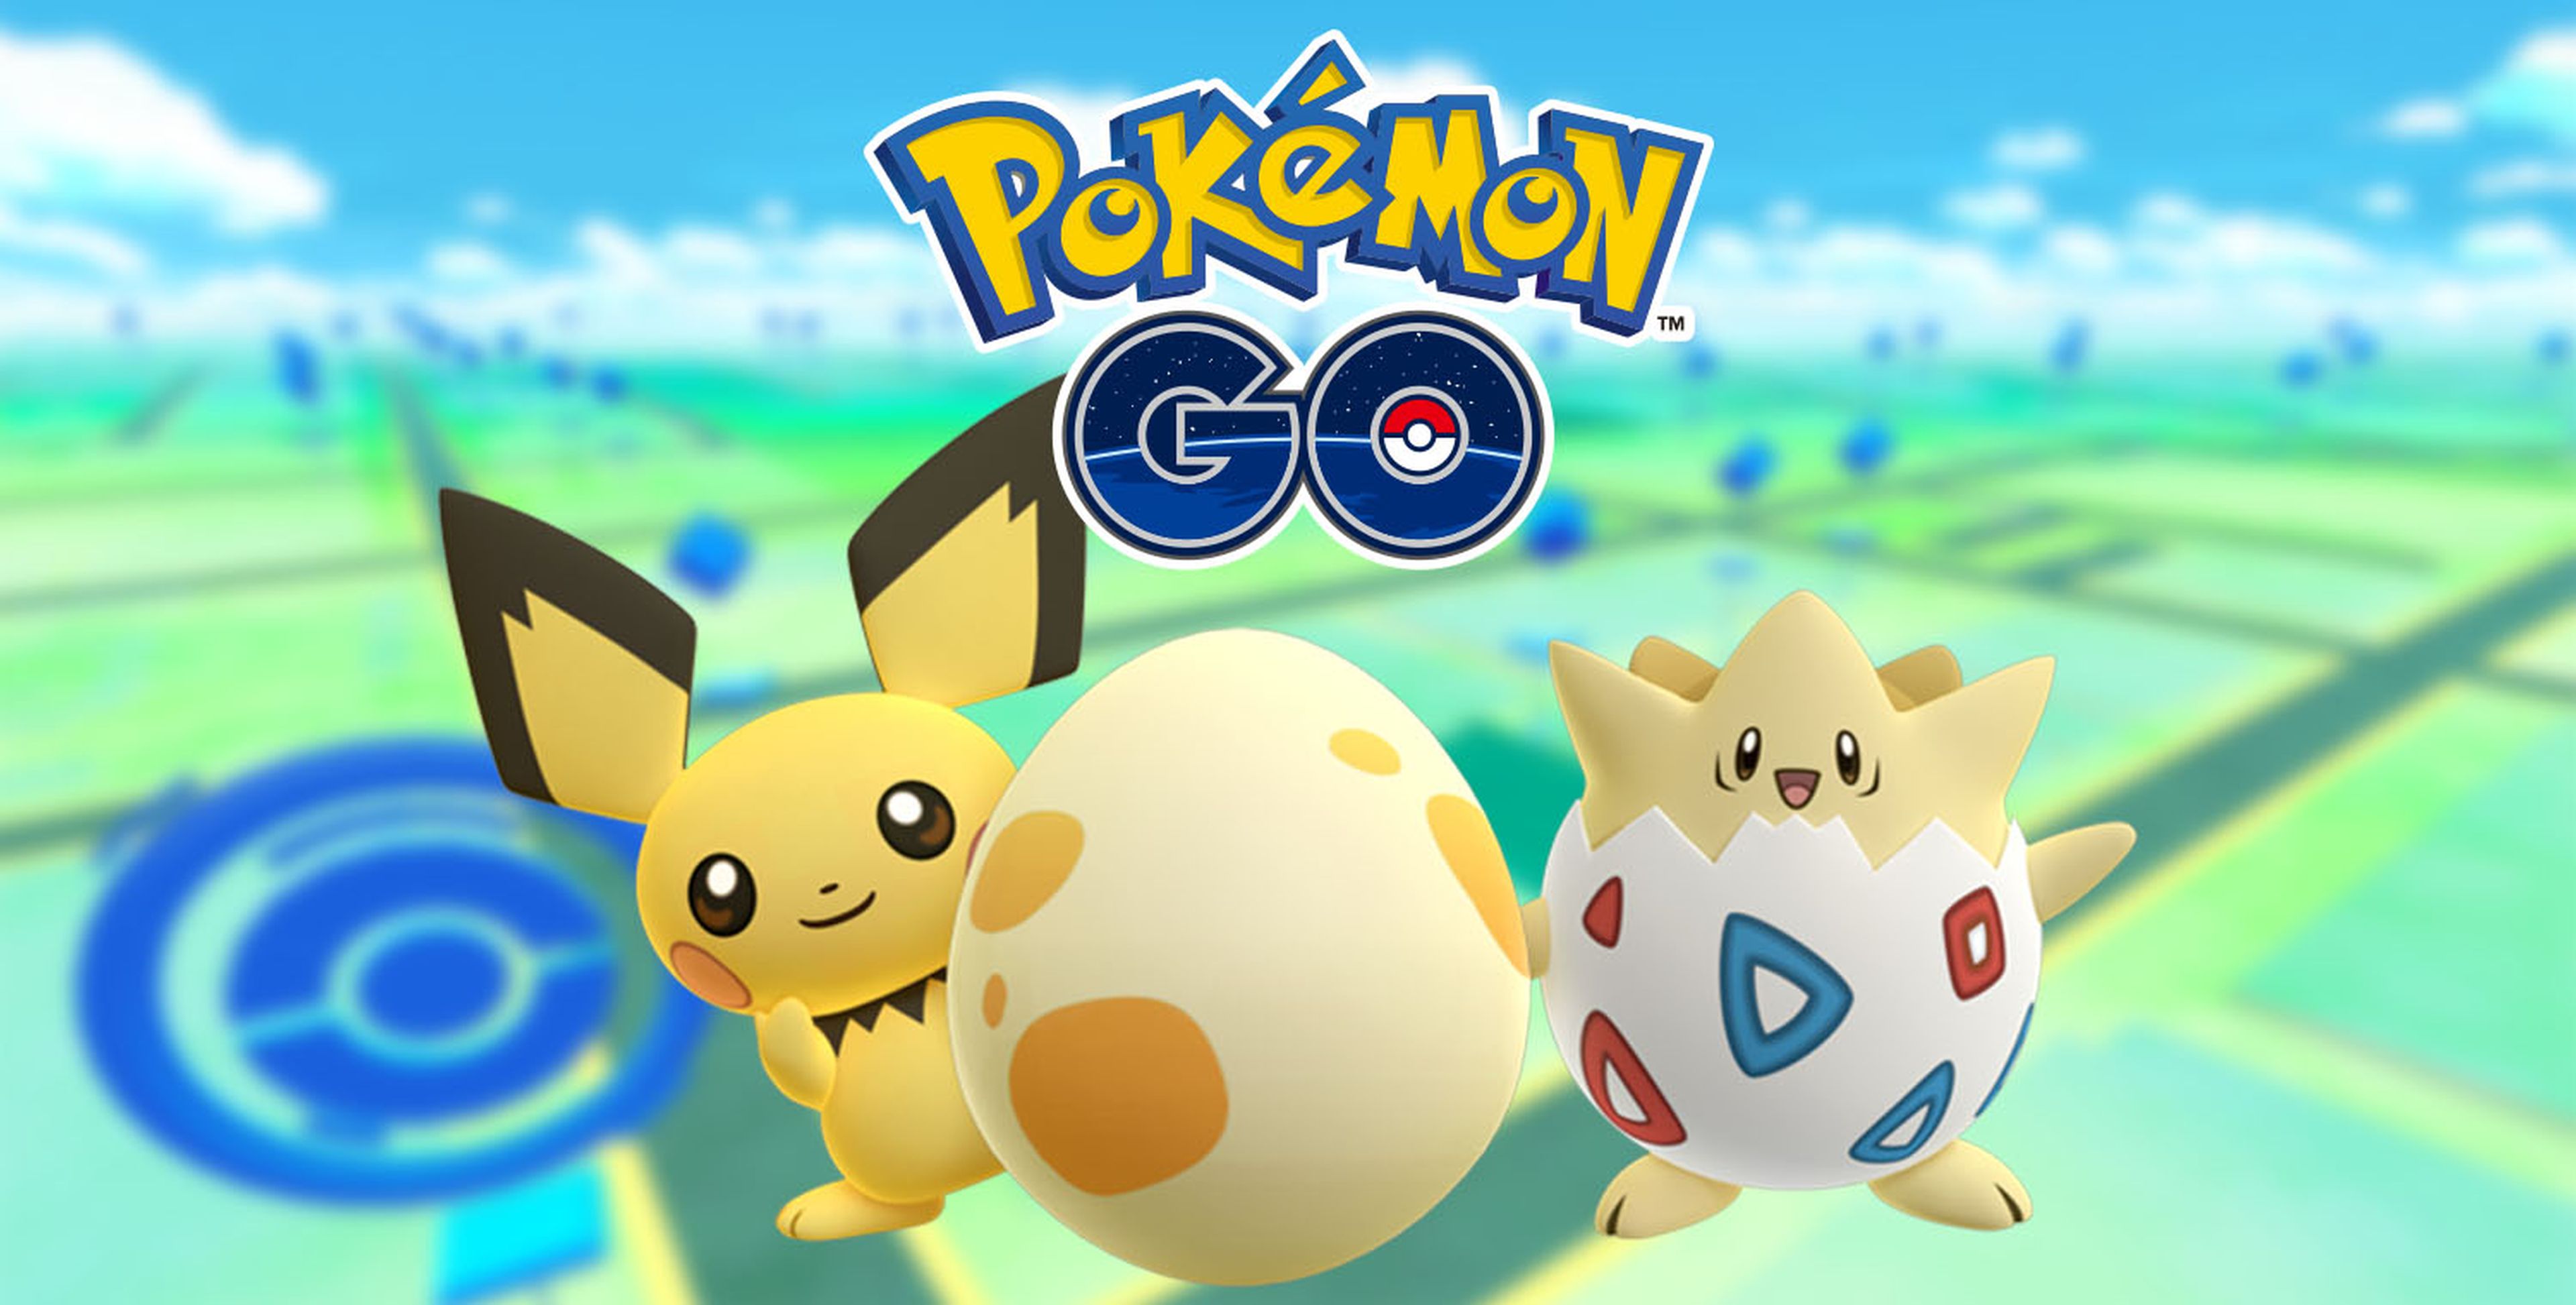 Pokémon GO - Tráiler con los nuevos Pokémon